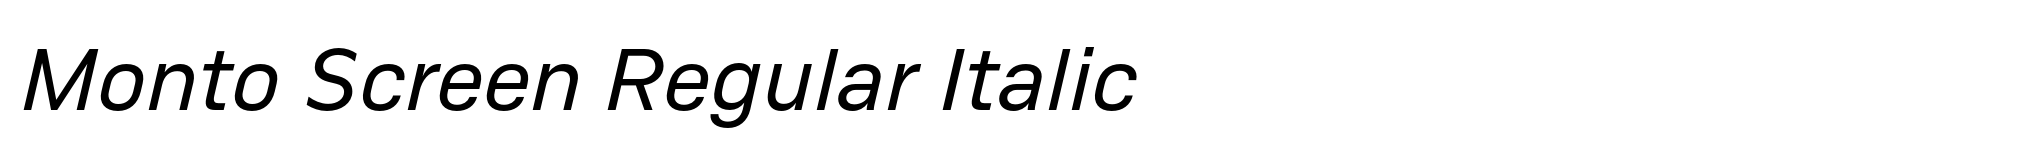 Monto Screen Regular Italic image